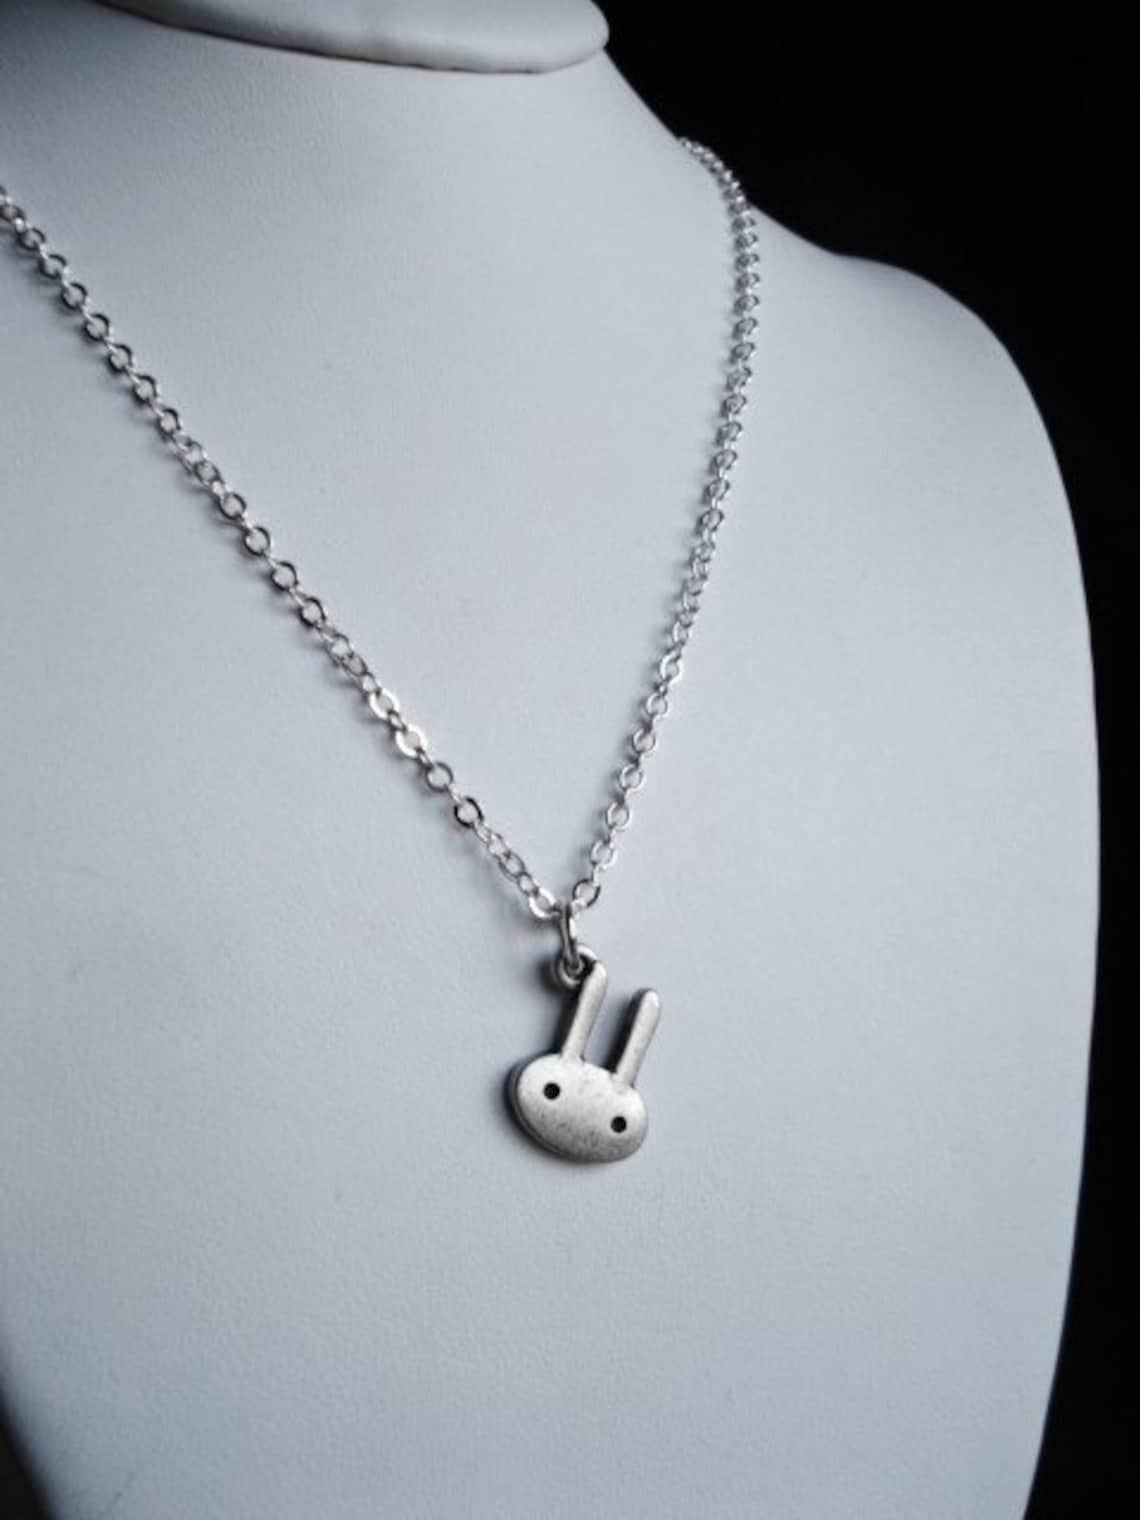 Bunny Necklace Silver Rabbit Charm Pendant Necklace Cute - Etsy